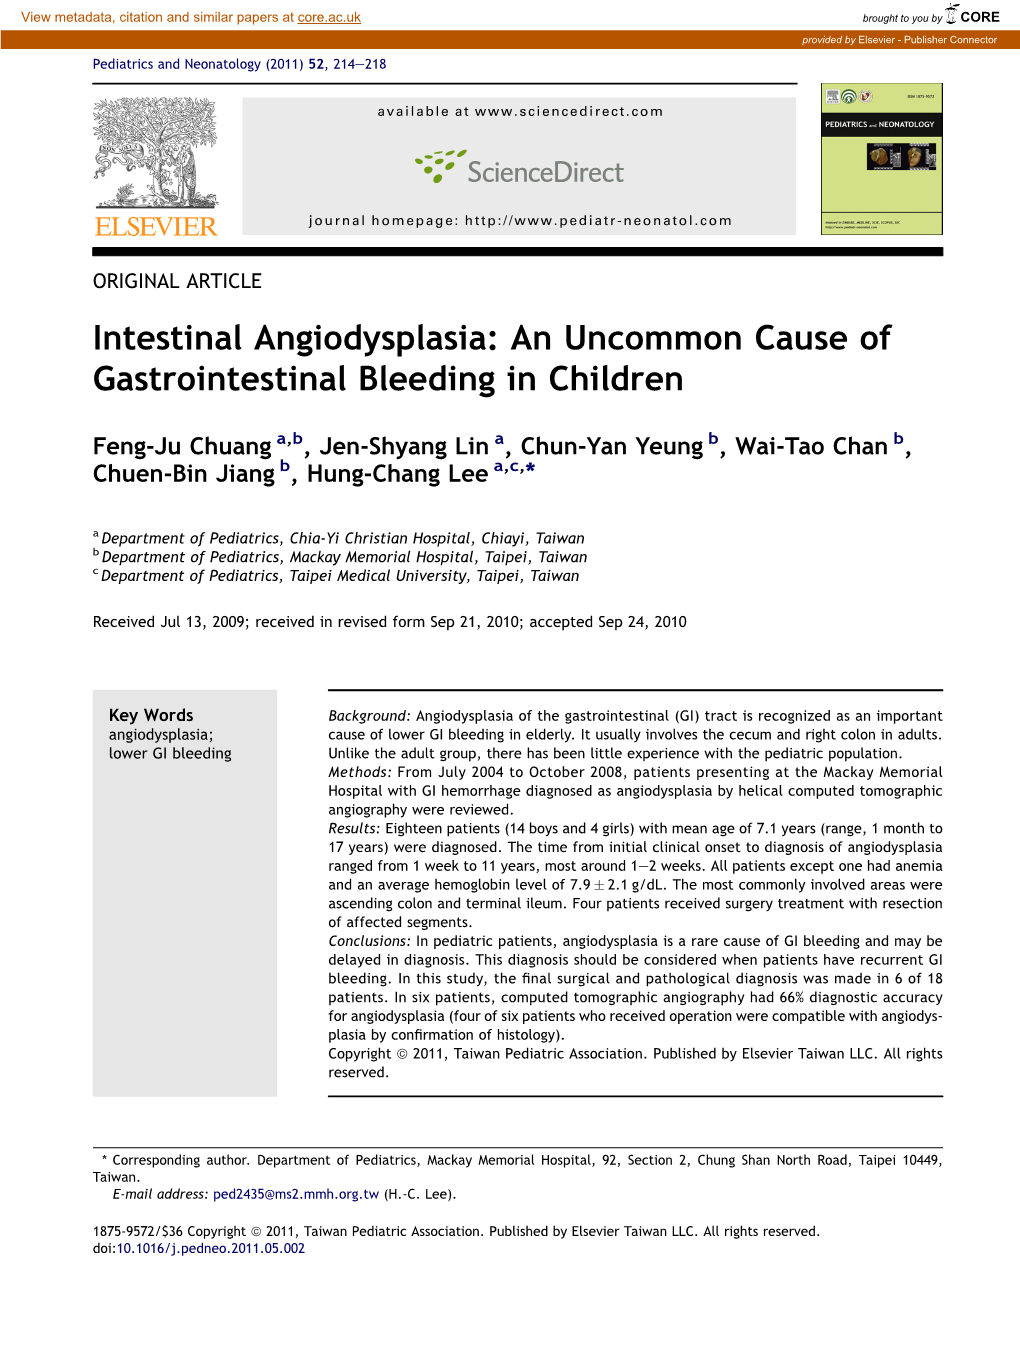 Intestinal Angiodysplasia: an Uncommon Cause of Gastrointestinal Bleeding in Children